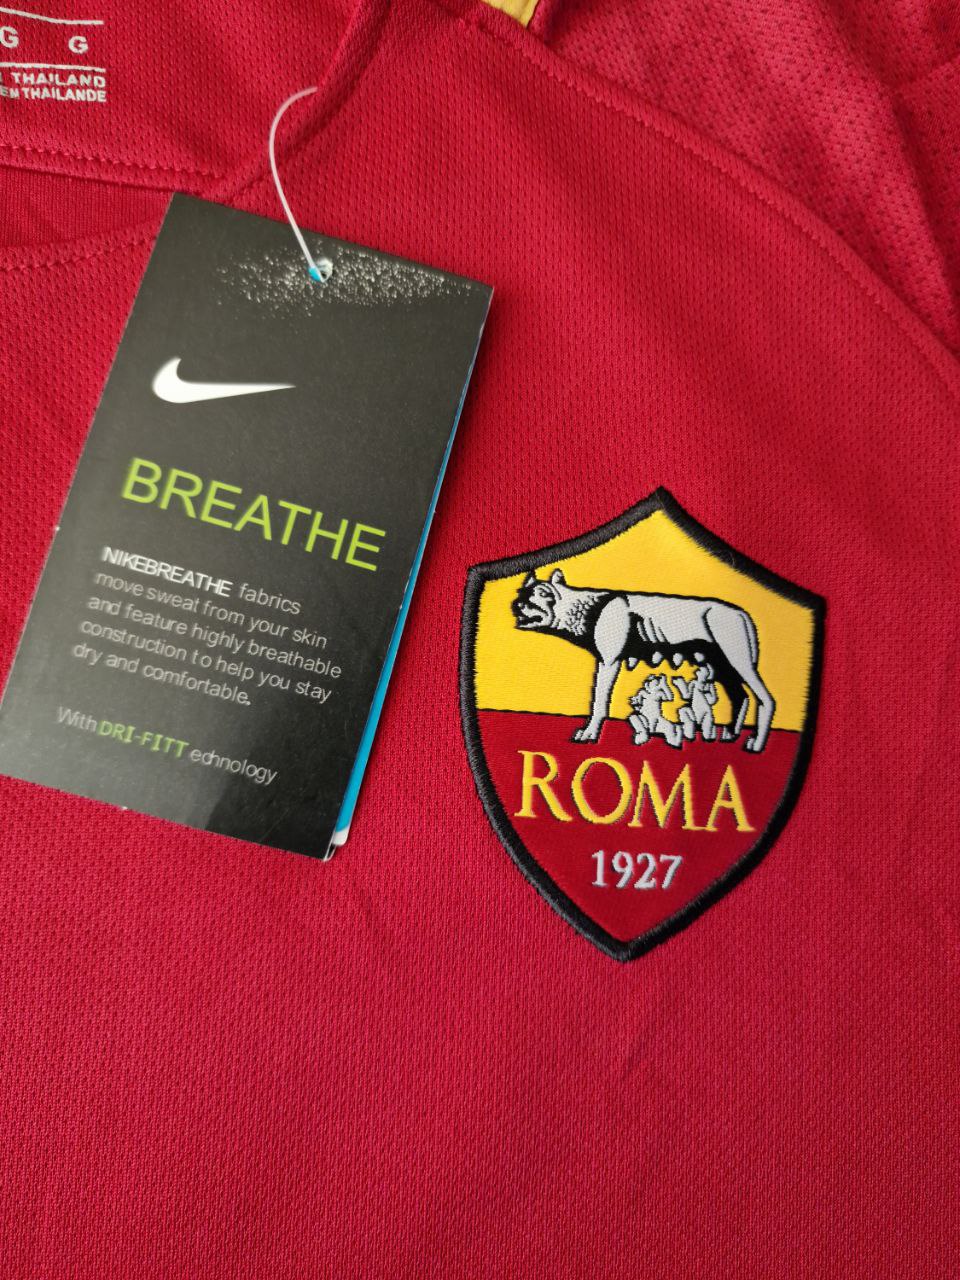 Totti Roma Nova Camisa Özel Üretim Forma